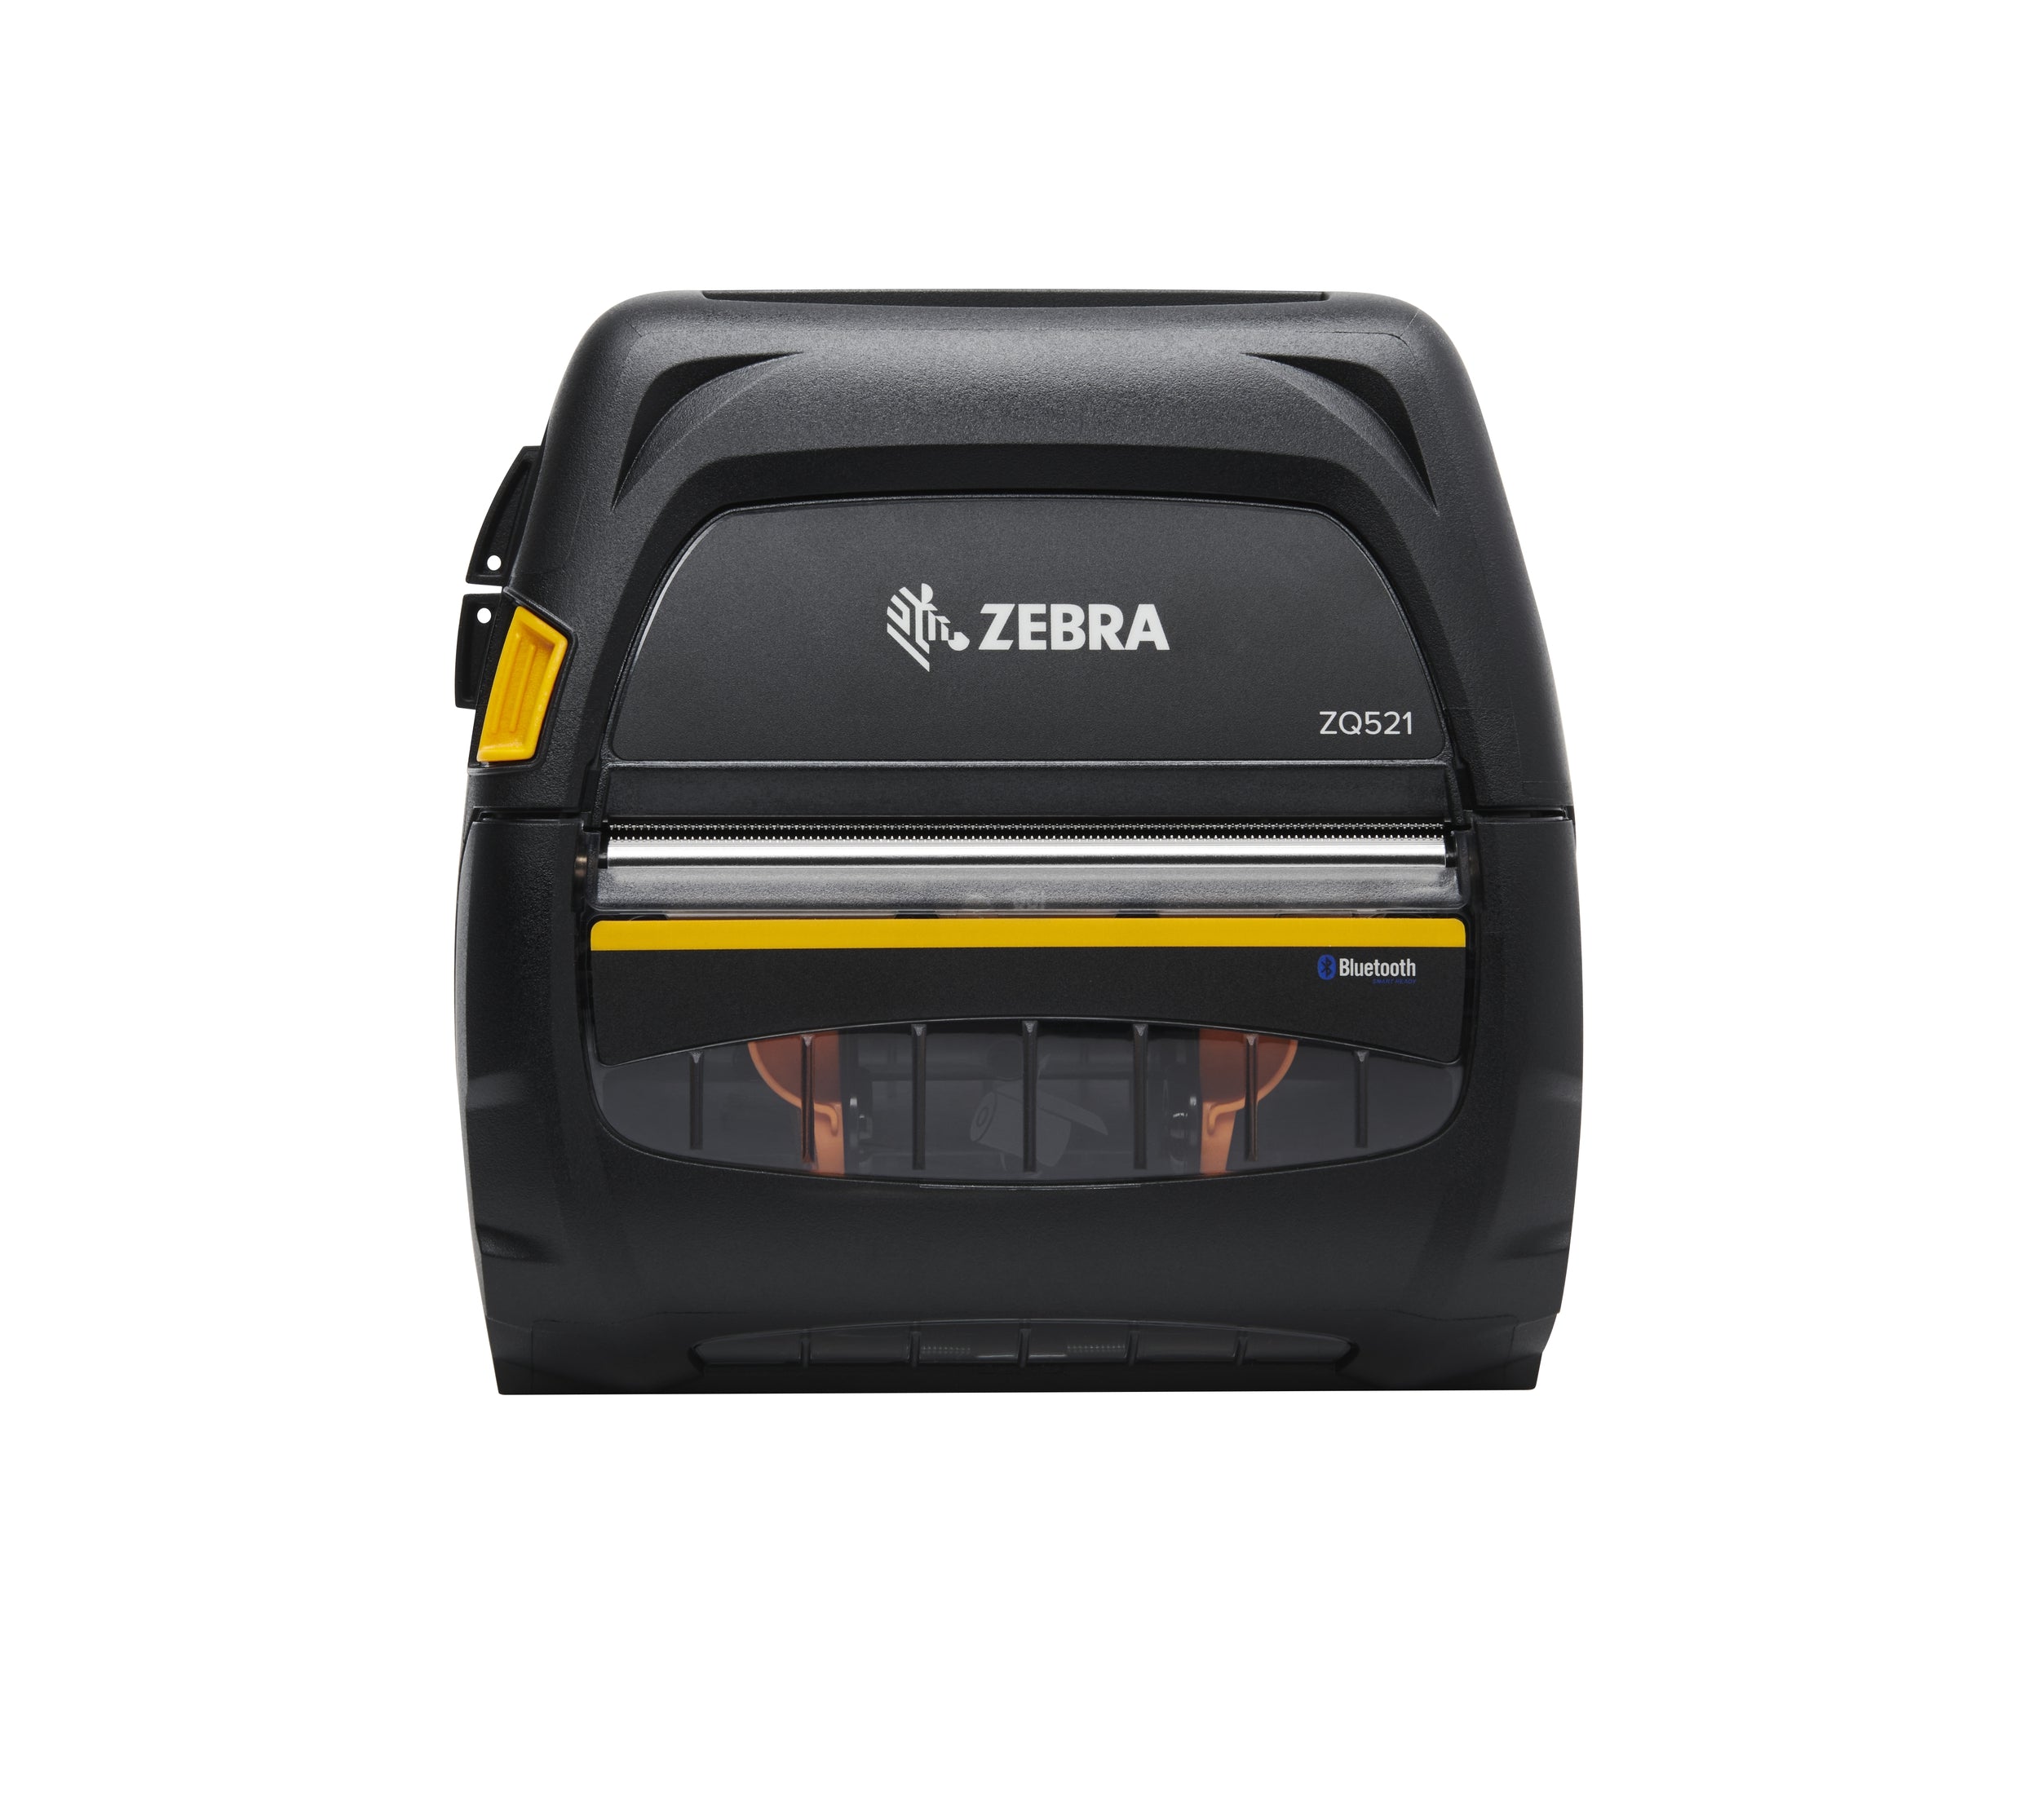 Impresora Portátil De Tickets Zebra Zq521 Portatil Wi-Fi